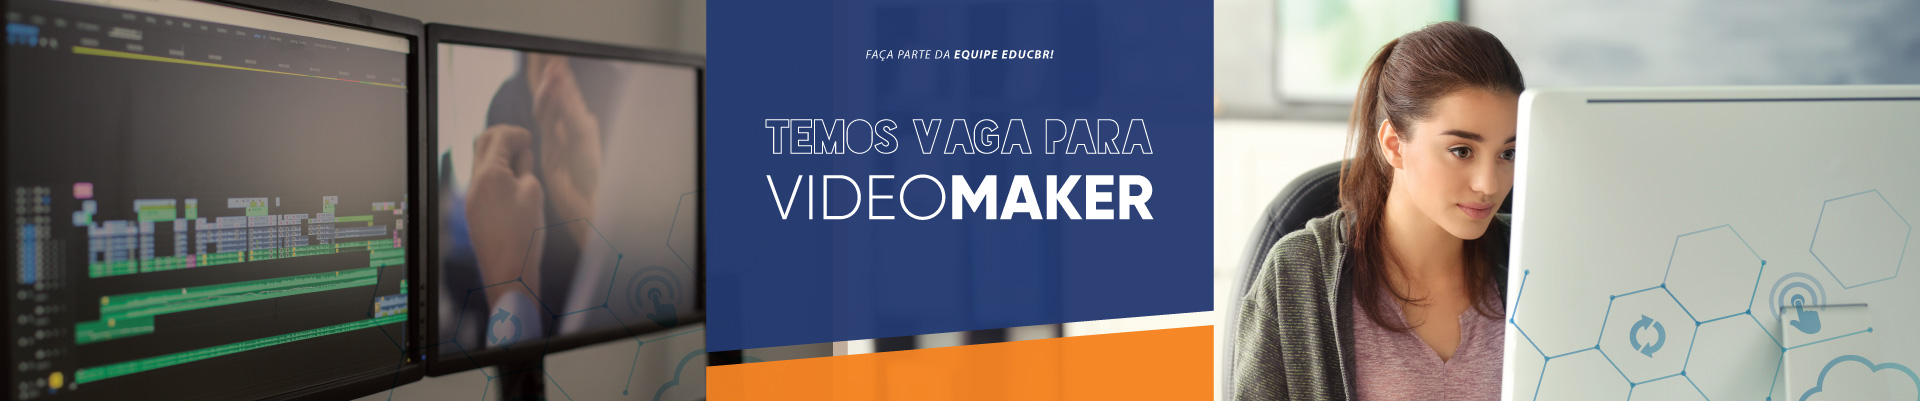 Processo seletivo - VideoMaker